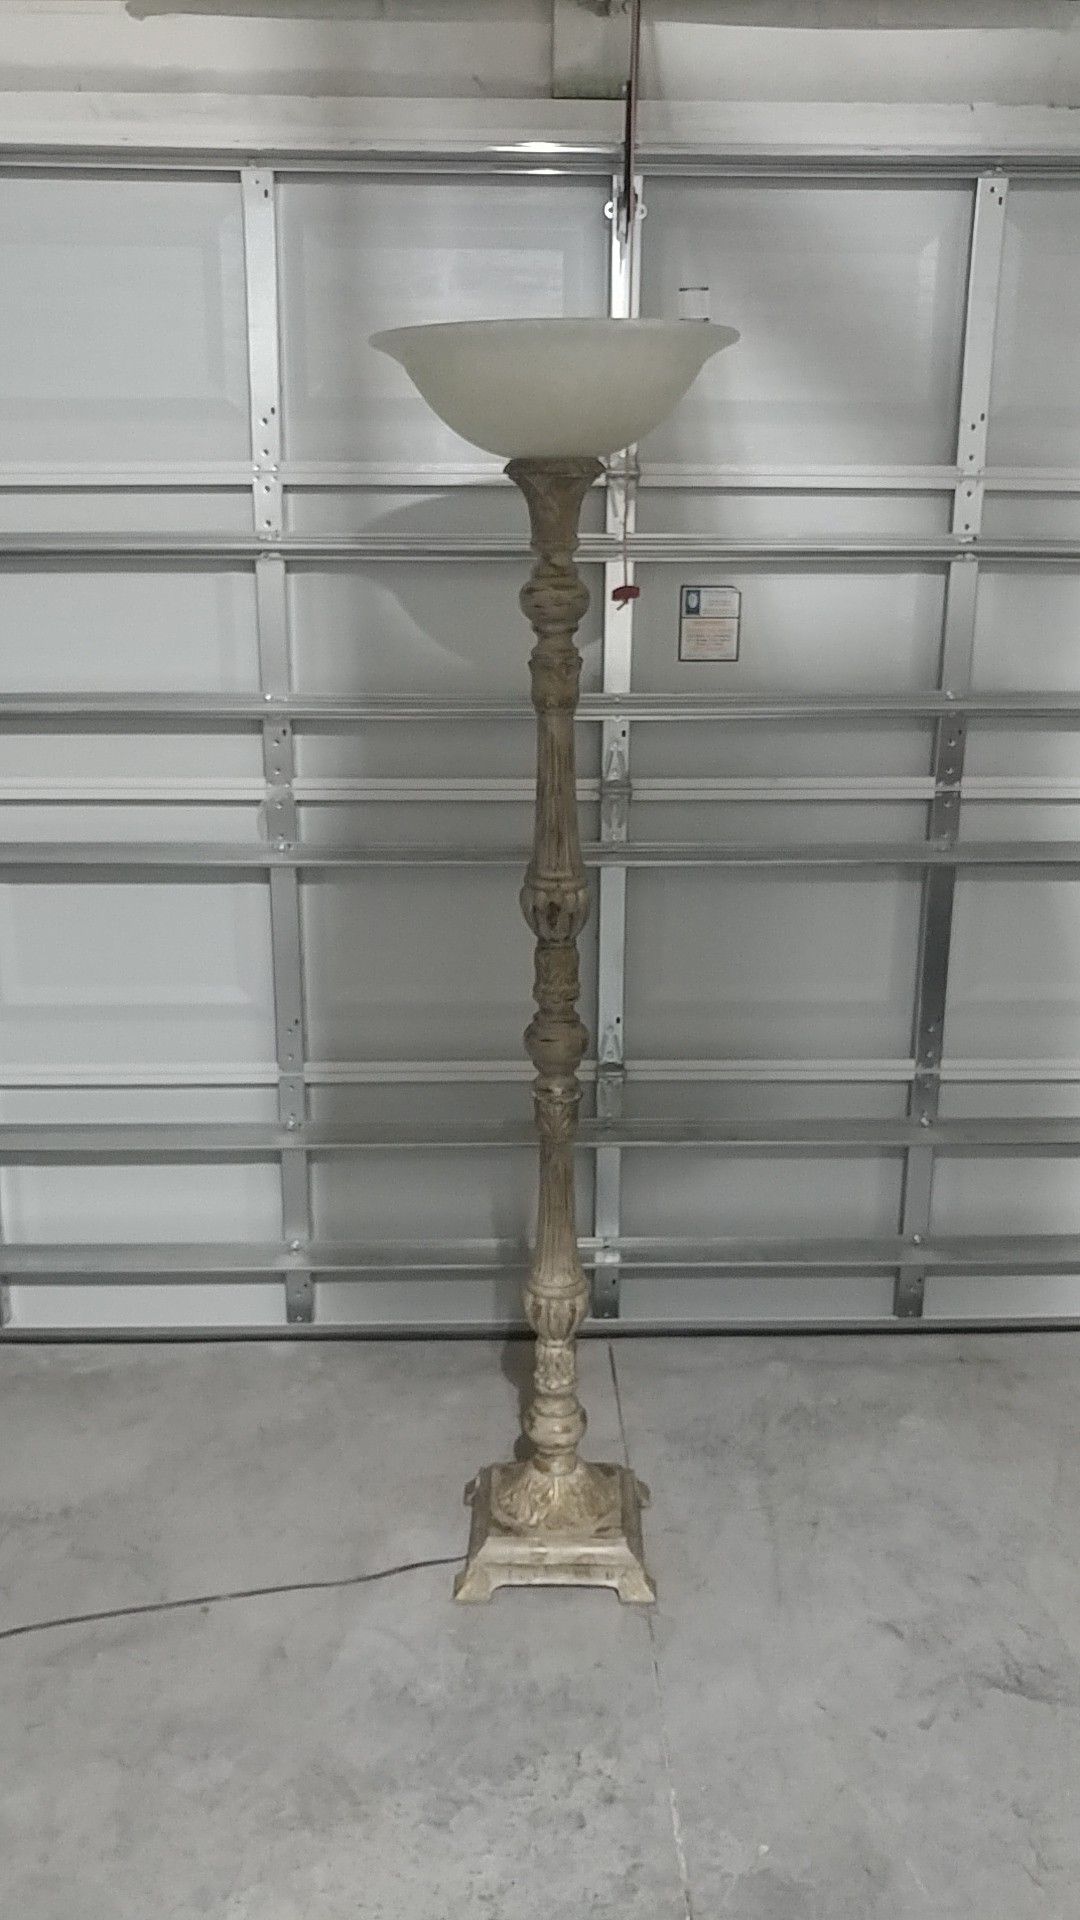 5'6" tall lamp